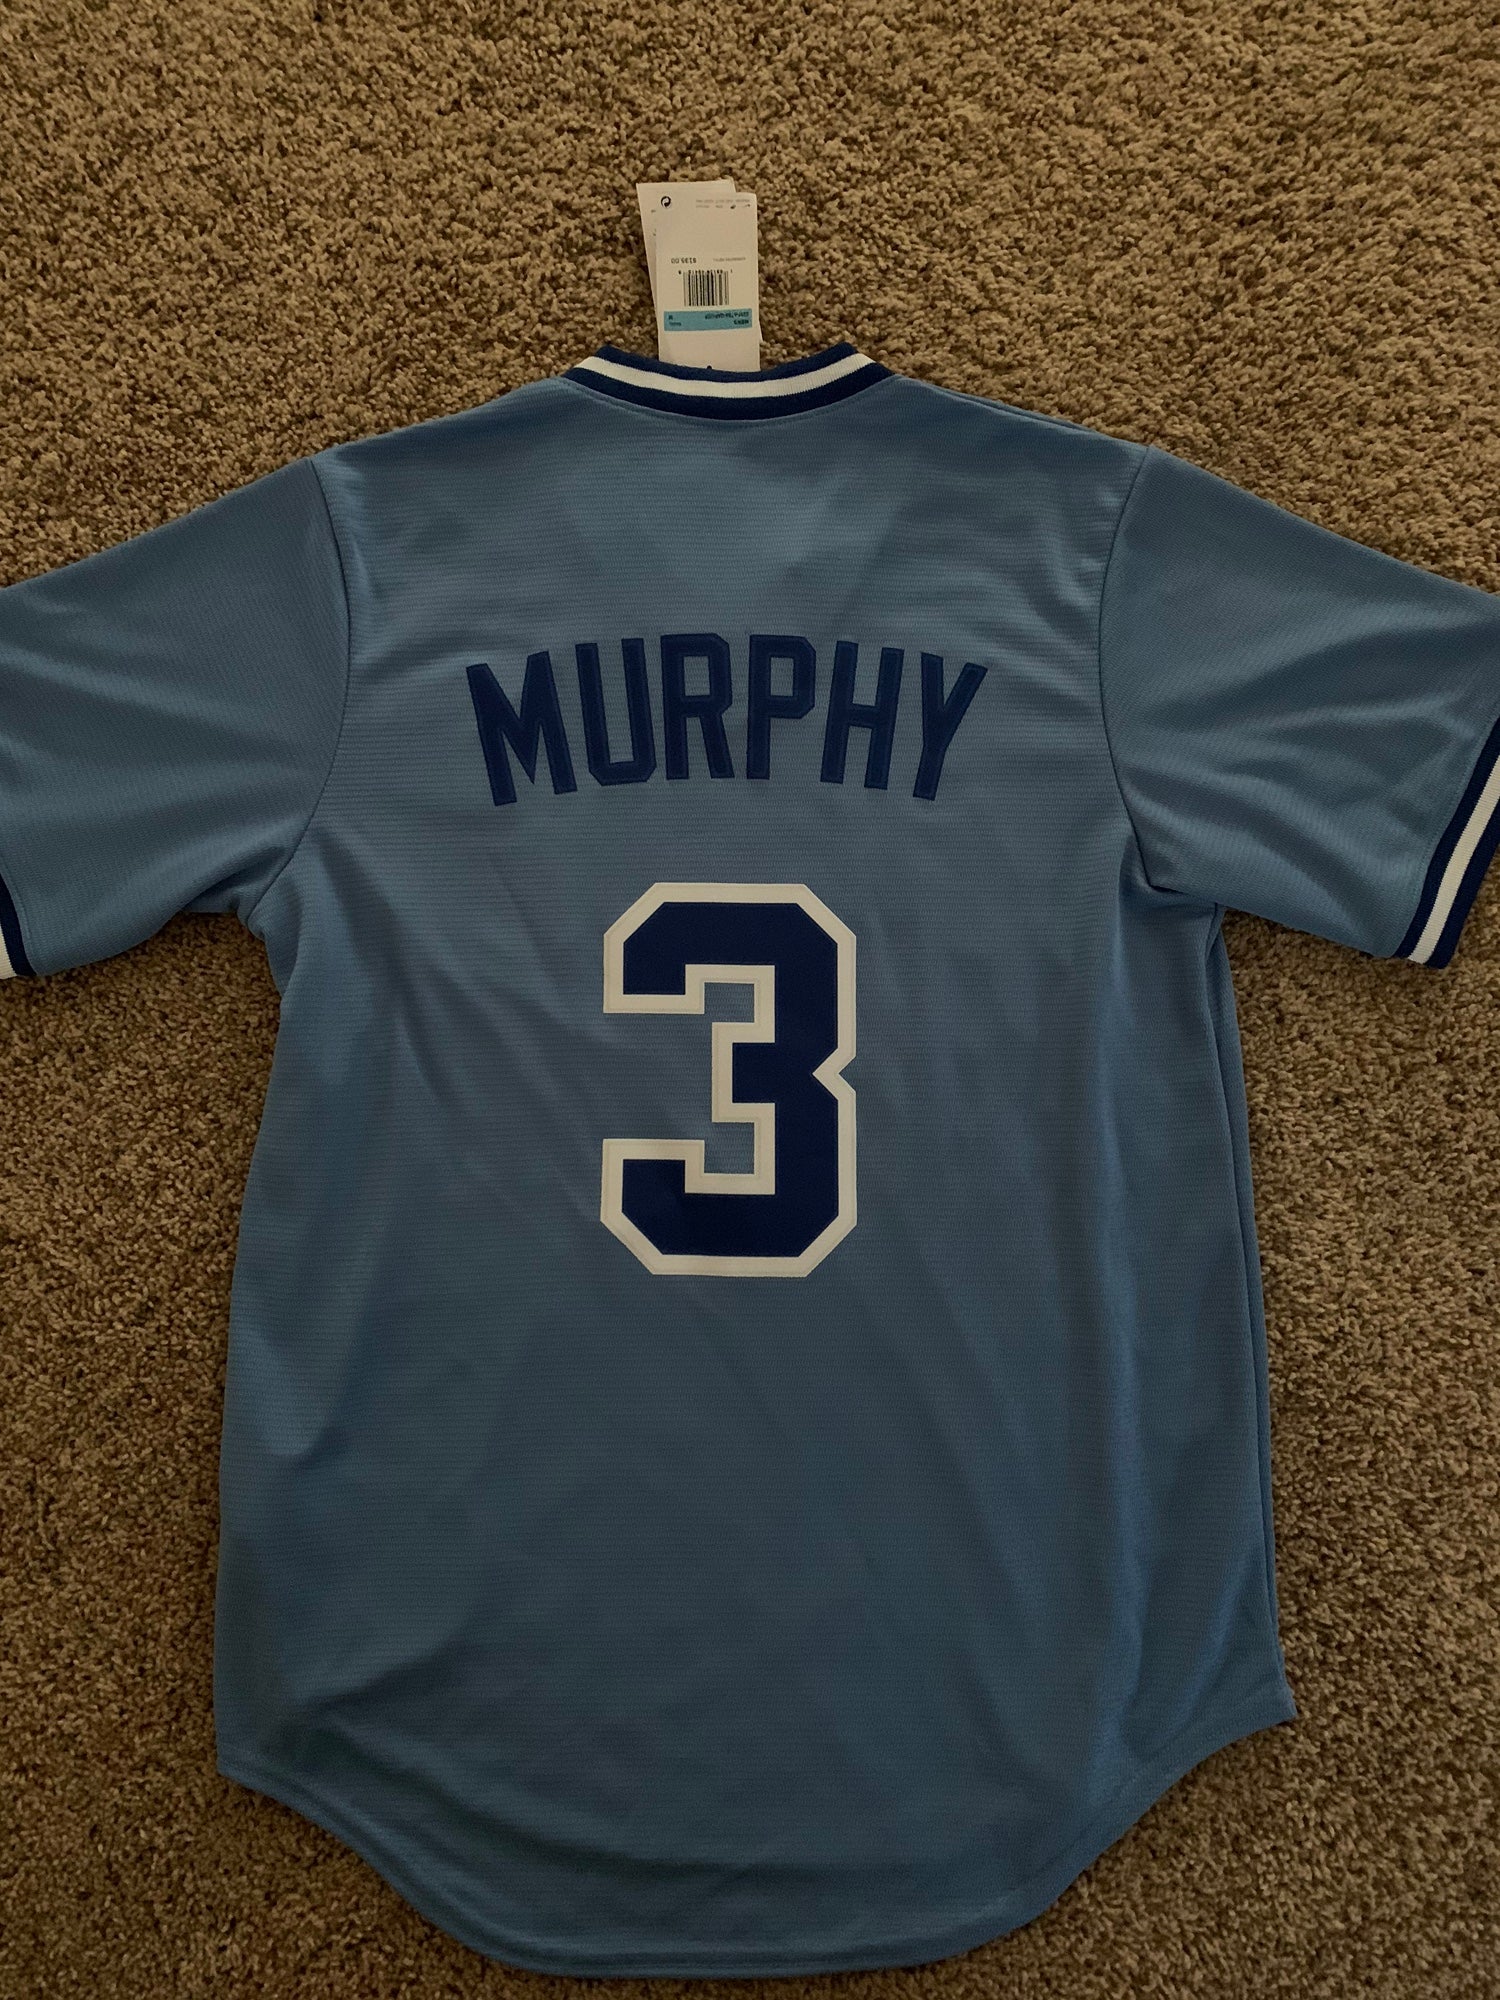 Dale Murphy Men's Atlanta Braves 1982 Throwback Jersey - Light Blue  Authentic